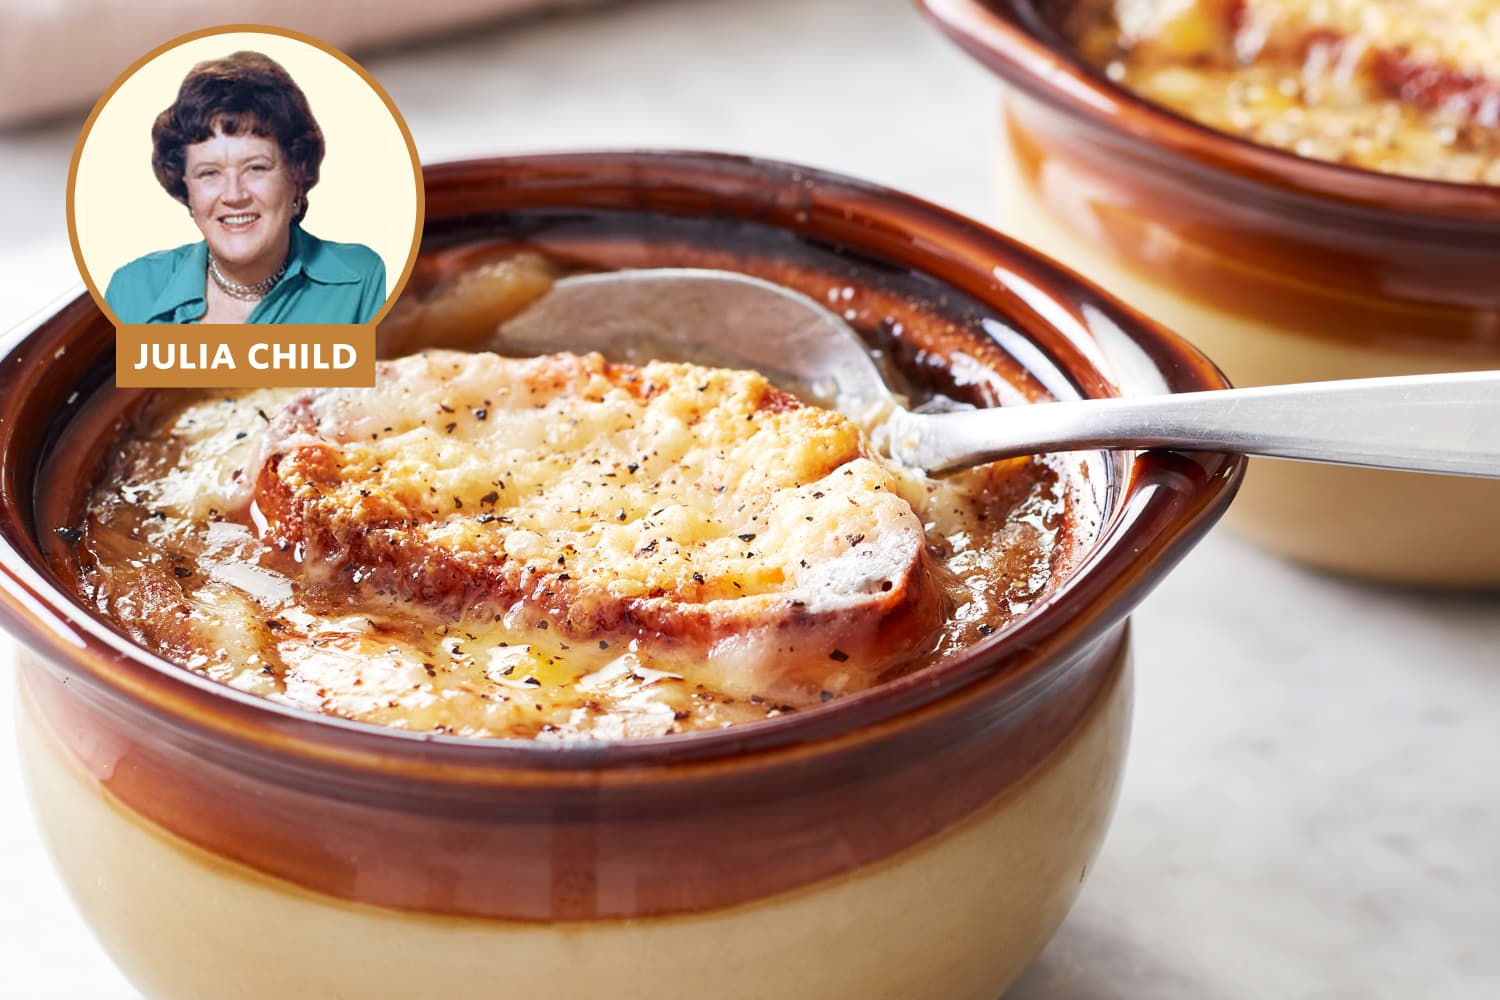 I Tried Julia Child's French Onion Soup Recipe | Kitchn